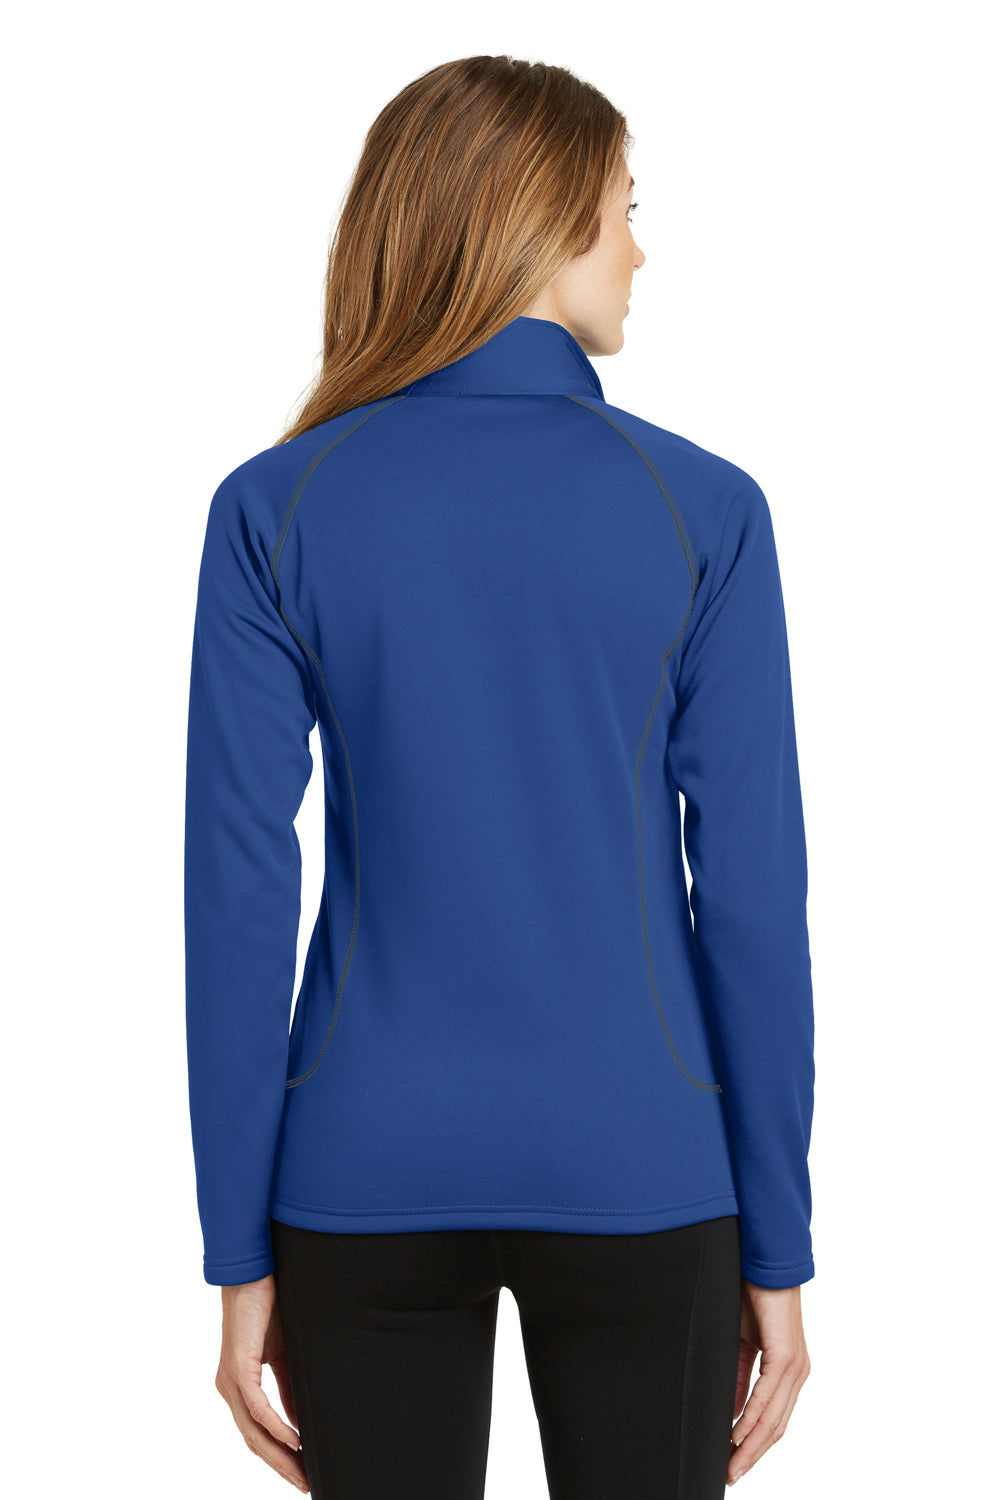 Eddie Bauer EB237 Womens Smooth Fleece 1/4 Zip Sweatshirt Cobalt Blue Model Back